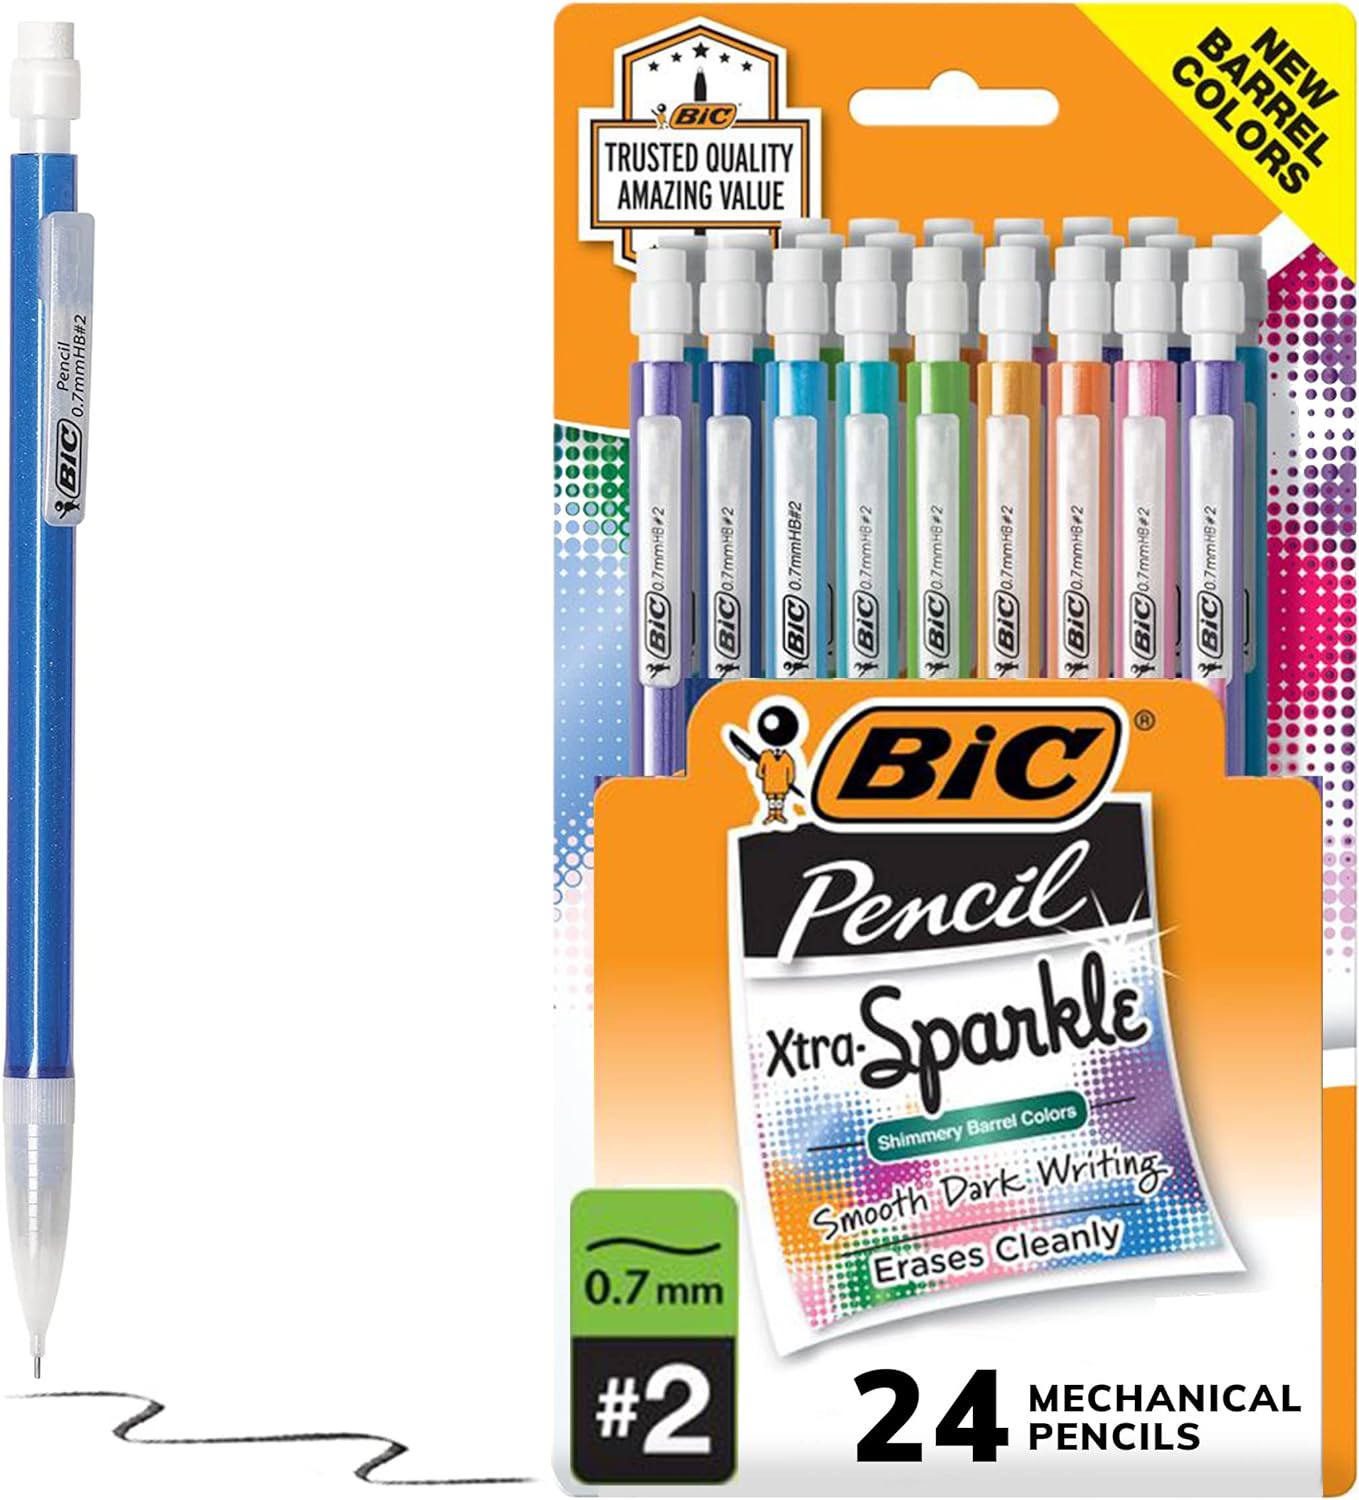 Good mechanical pencils at a good price.